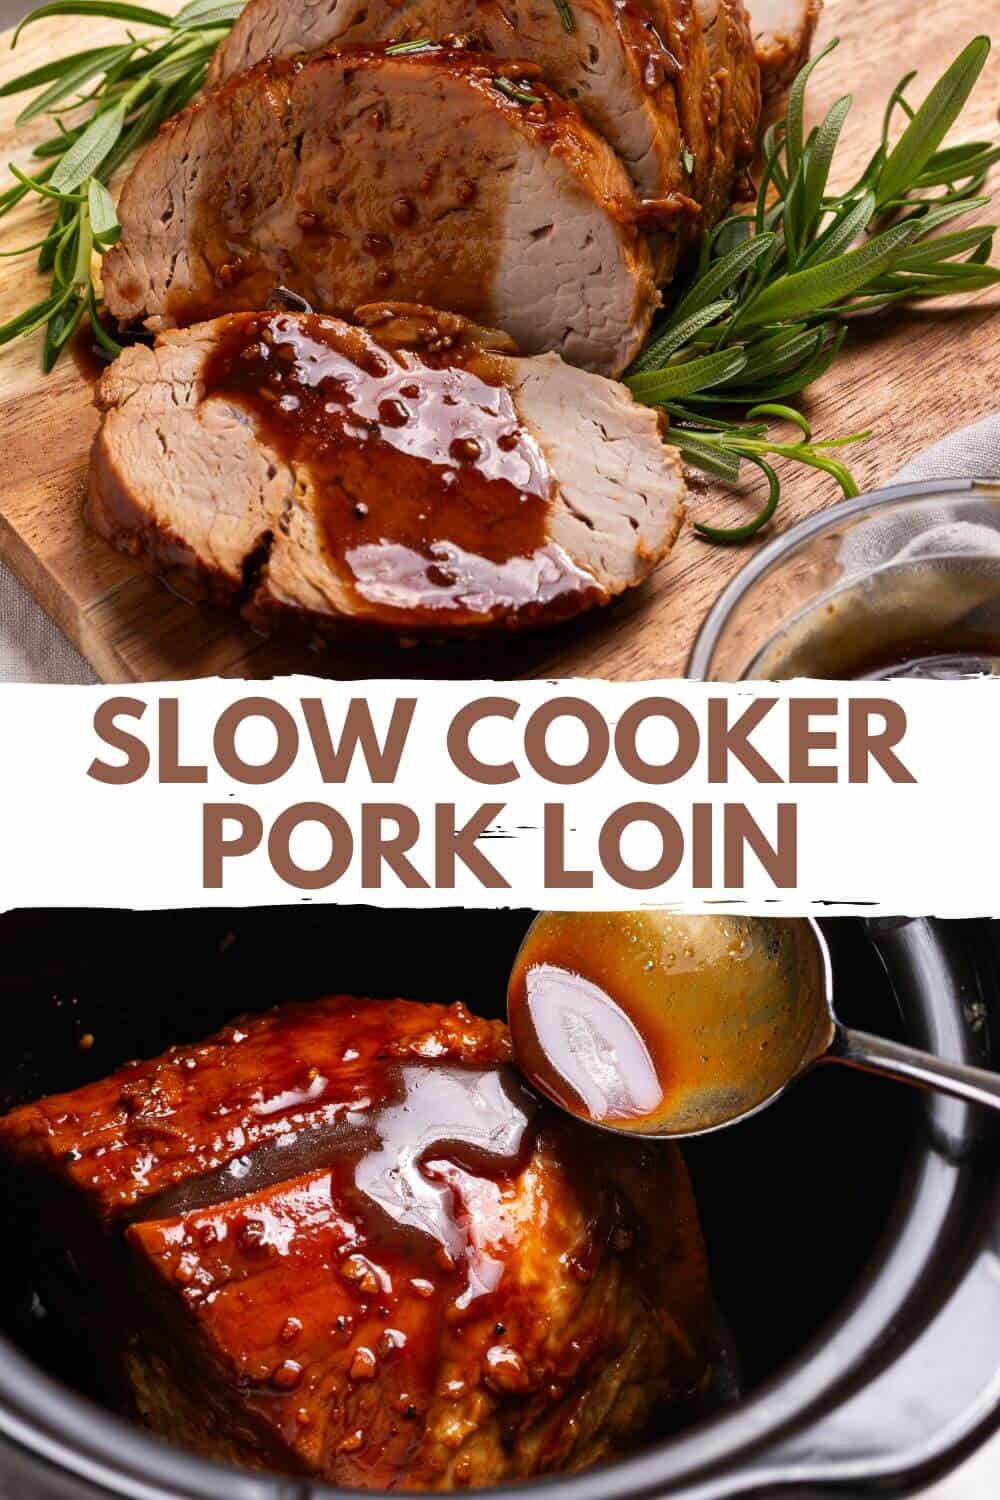 Slow cooker pork loin.